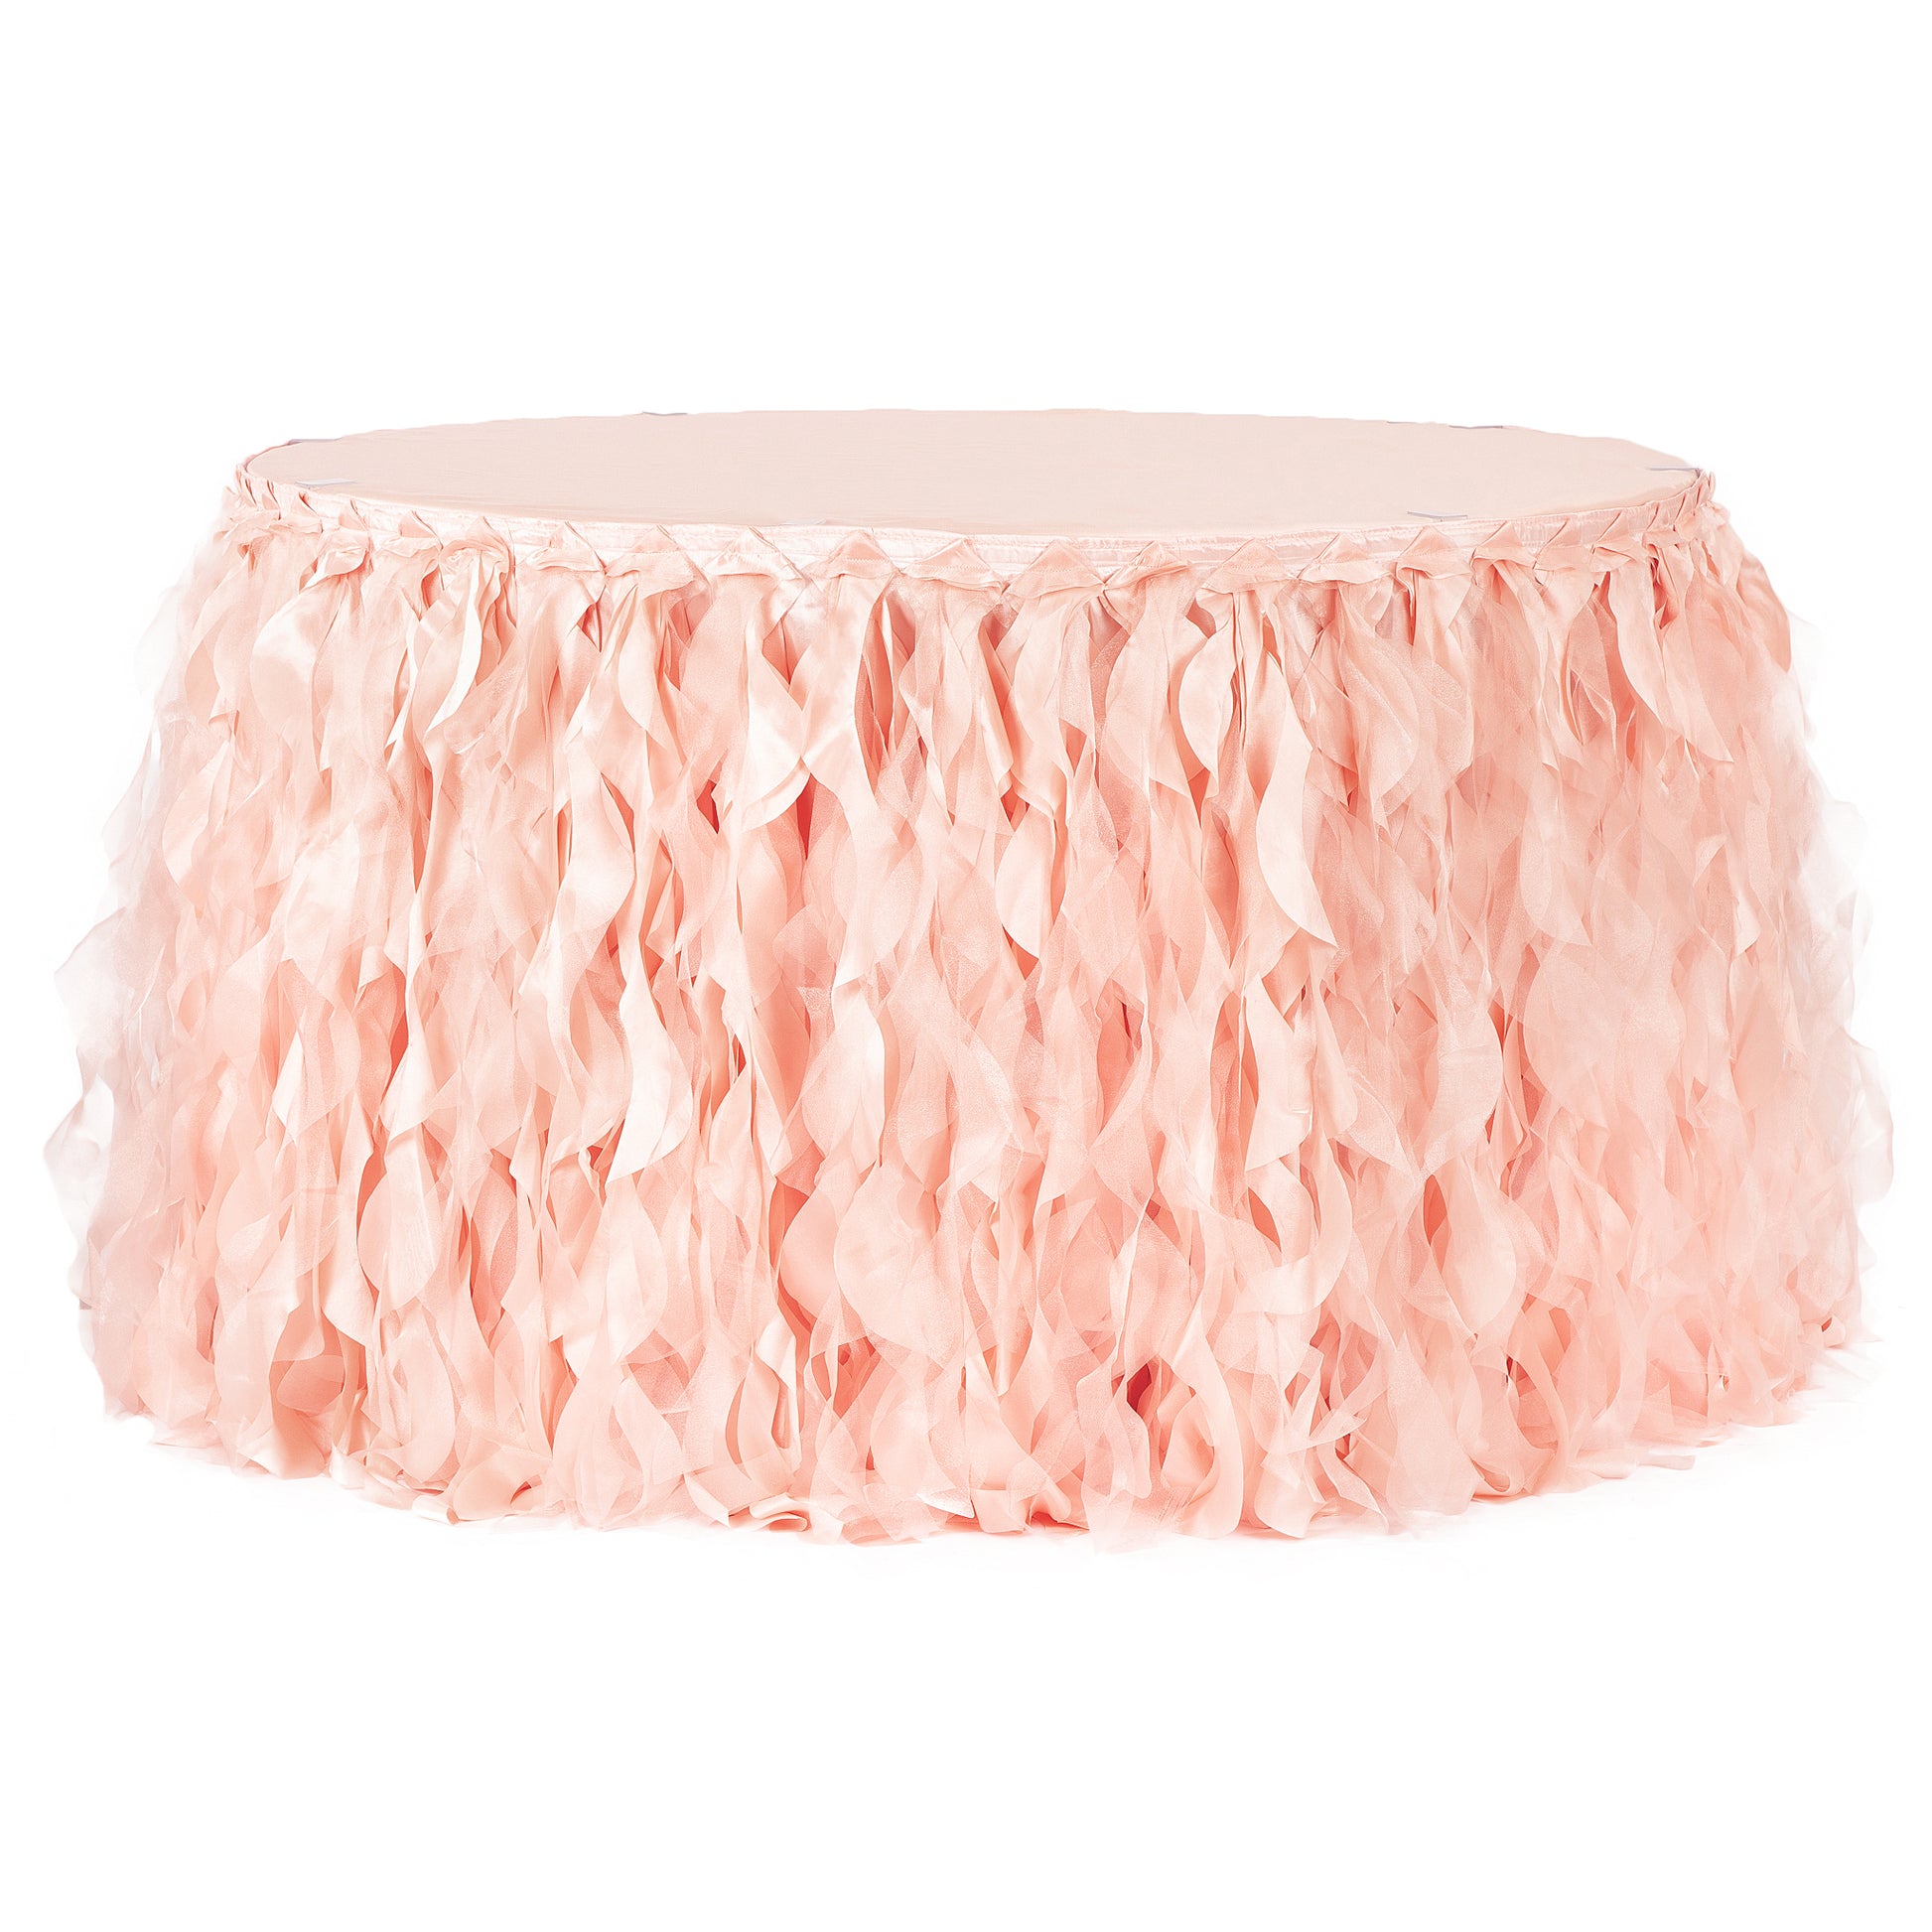 Curly Willow 21ft Table Skirt - Blush/Rose Gold - CV Linens